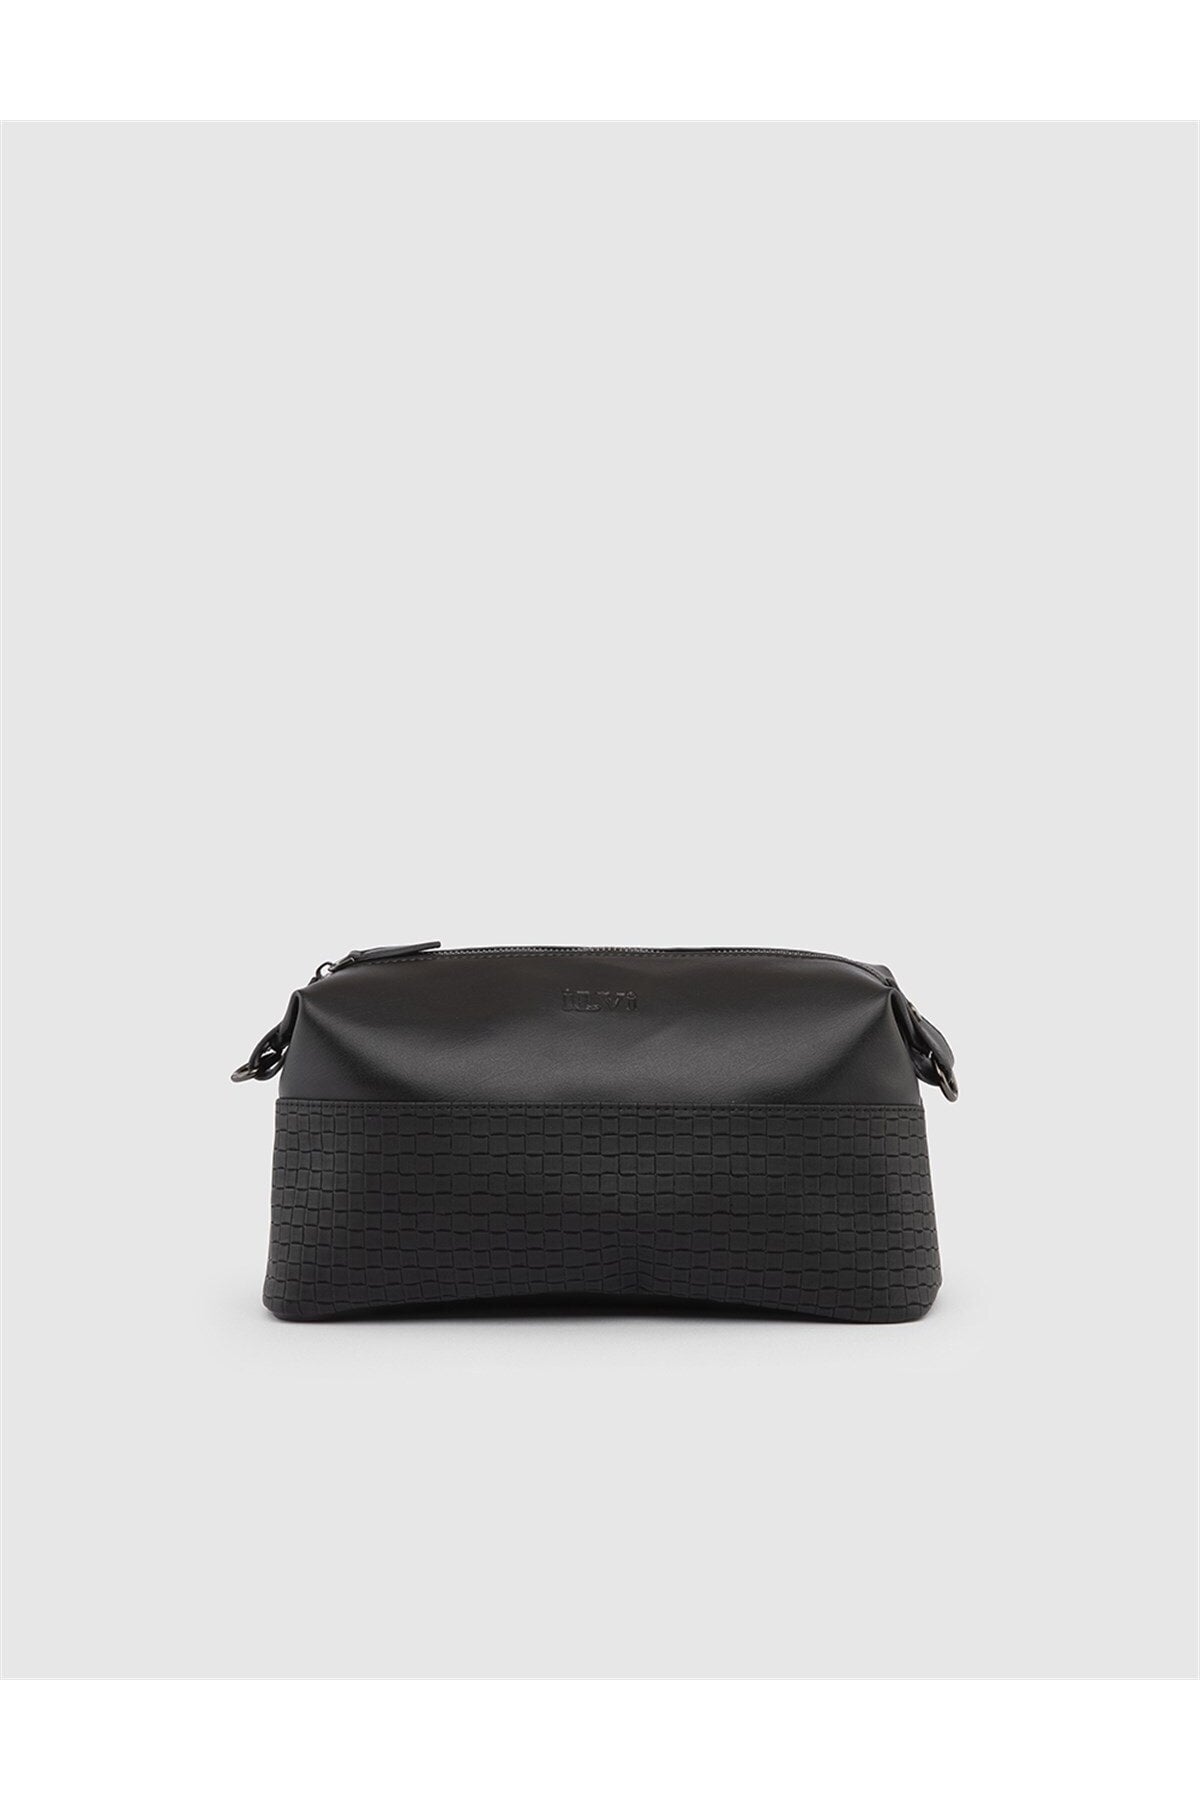 Peniche Men's Handbag Black